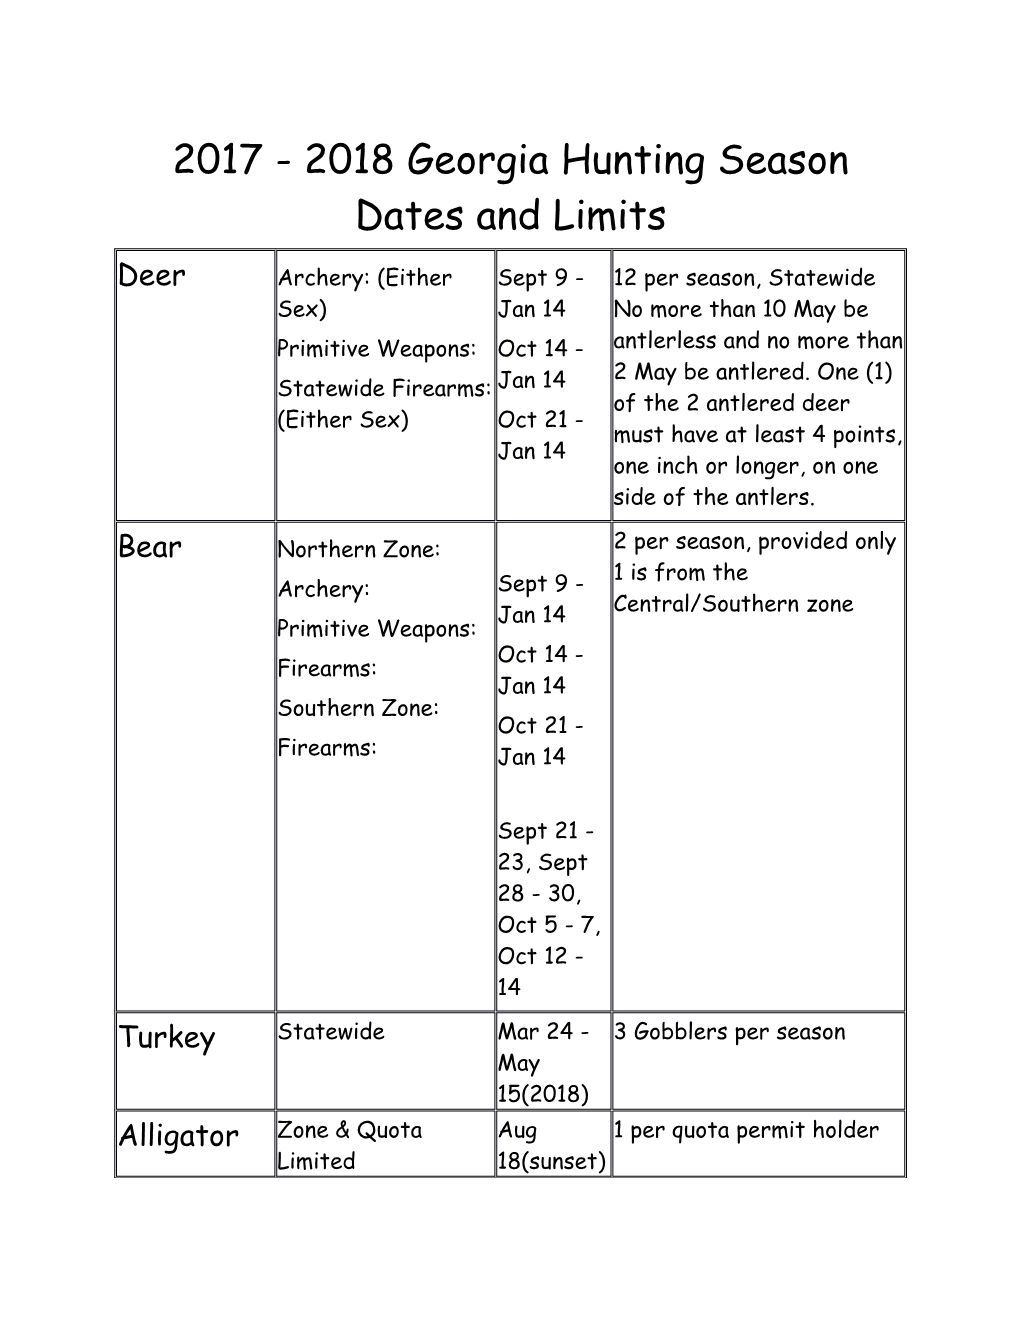 2017 - 2018 Georgia Hunting Season Dates and Limits